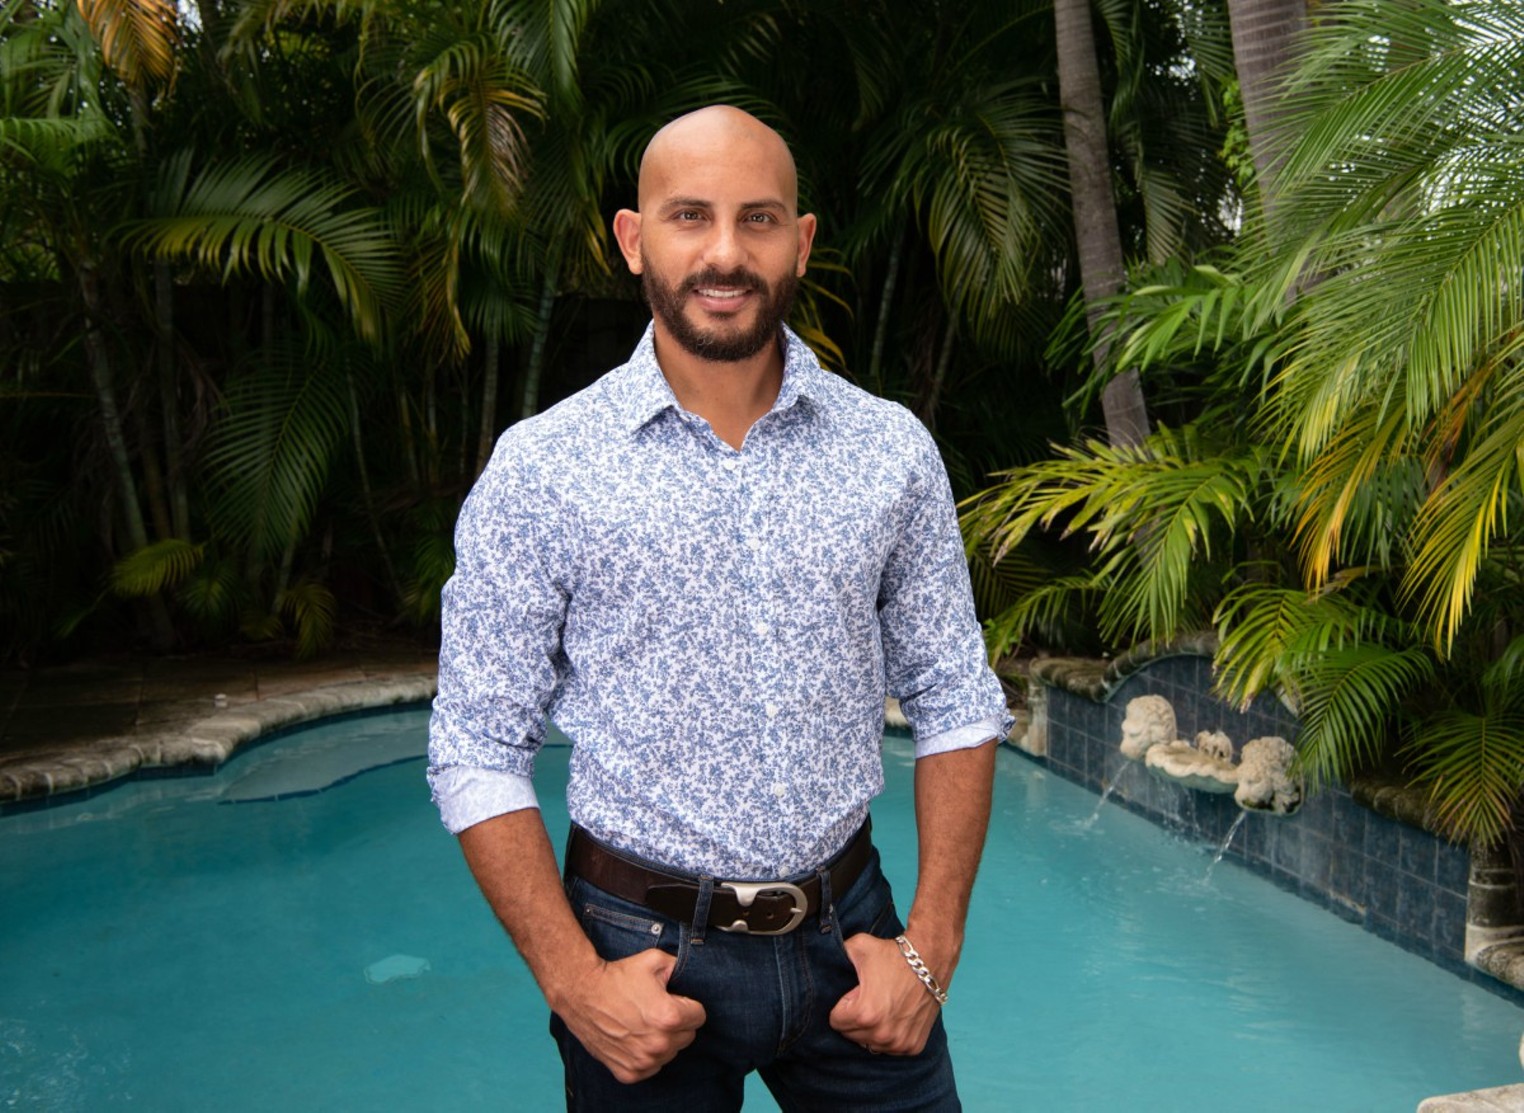 Porn Star Juan Melecio Runs for Wilton Manors City Commission | Miami New  Times